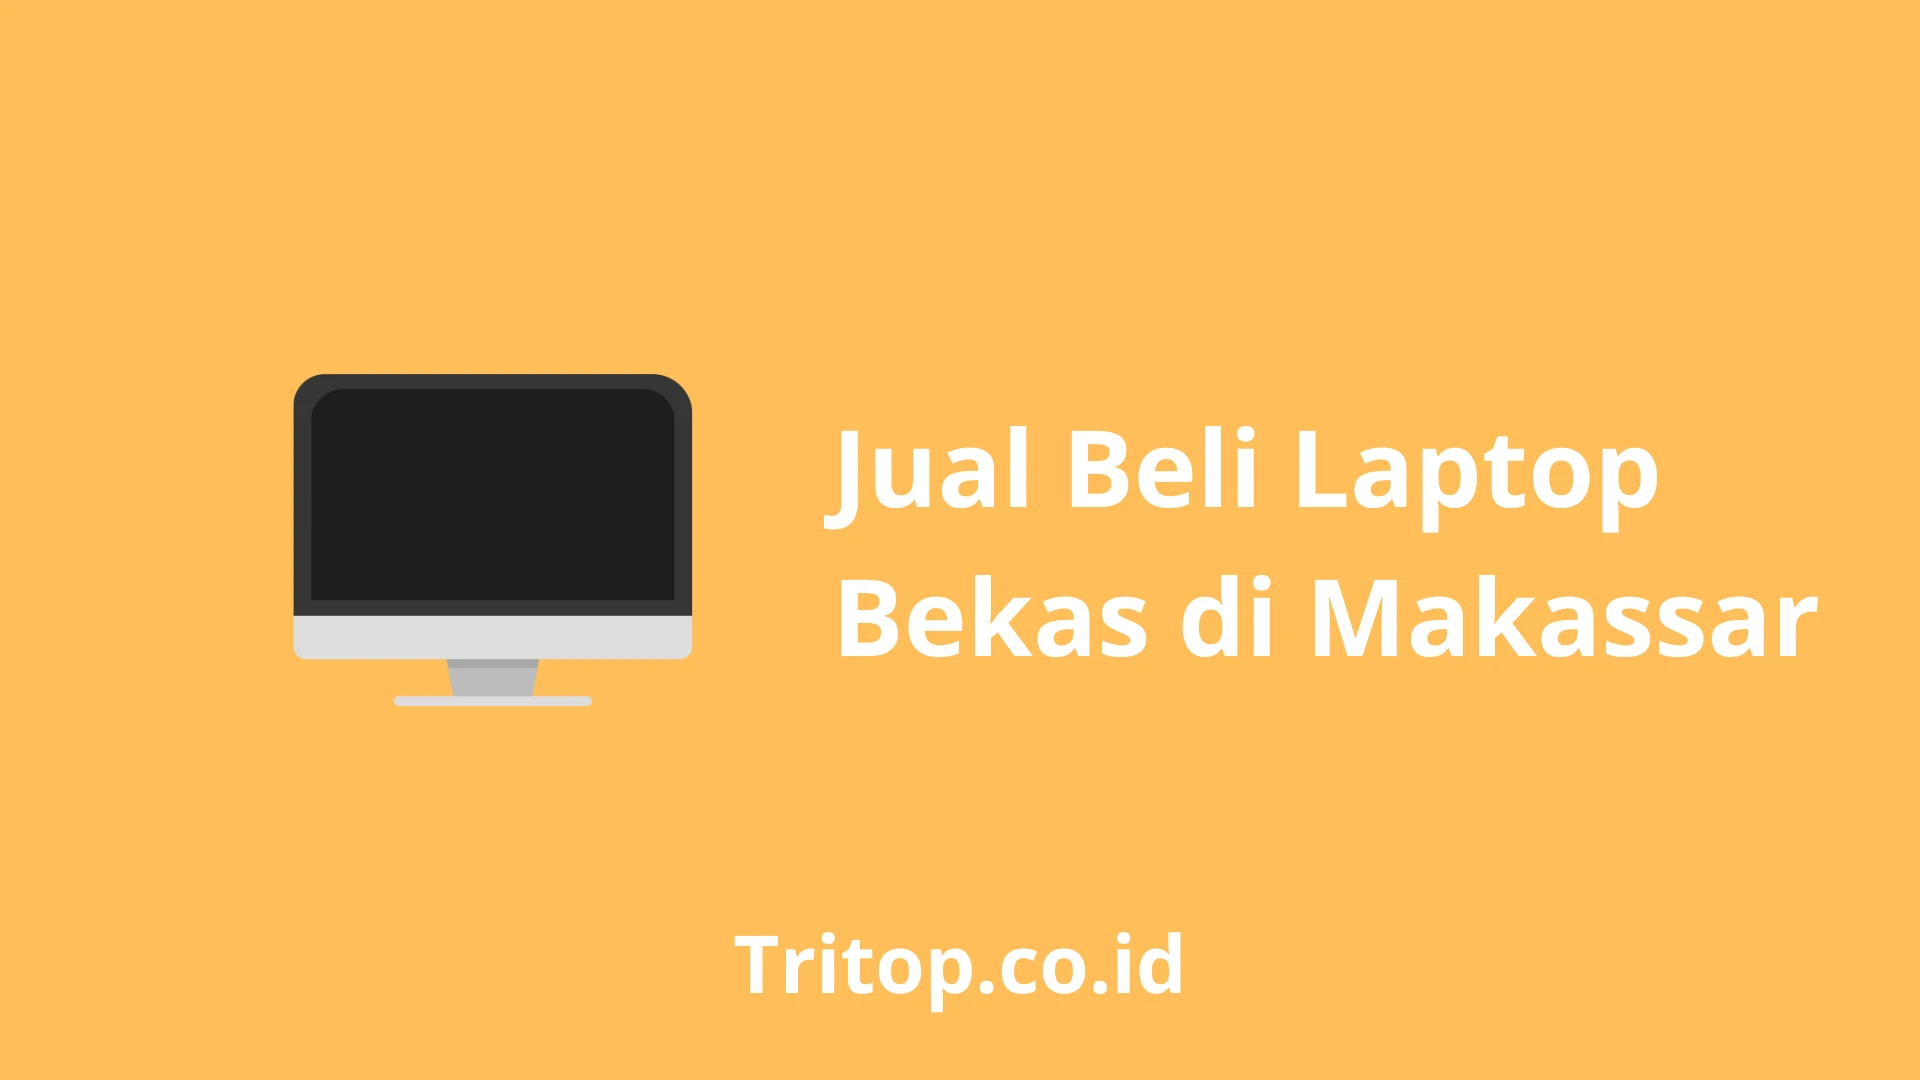 Jual Beli Laptop Bekas Makassar Tritop.co.id